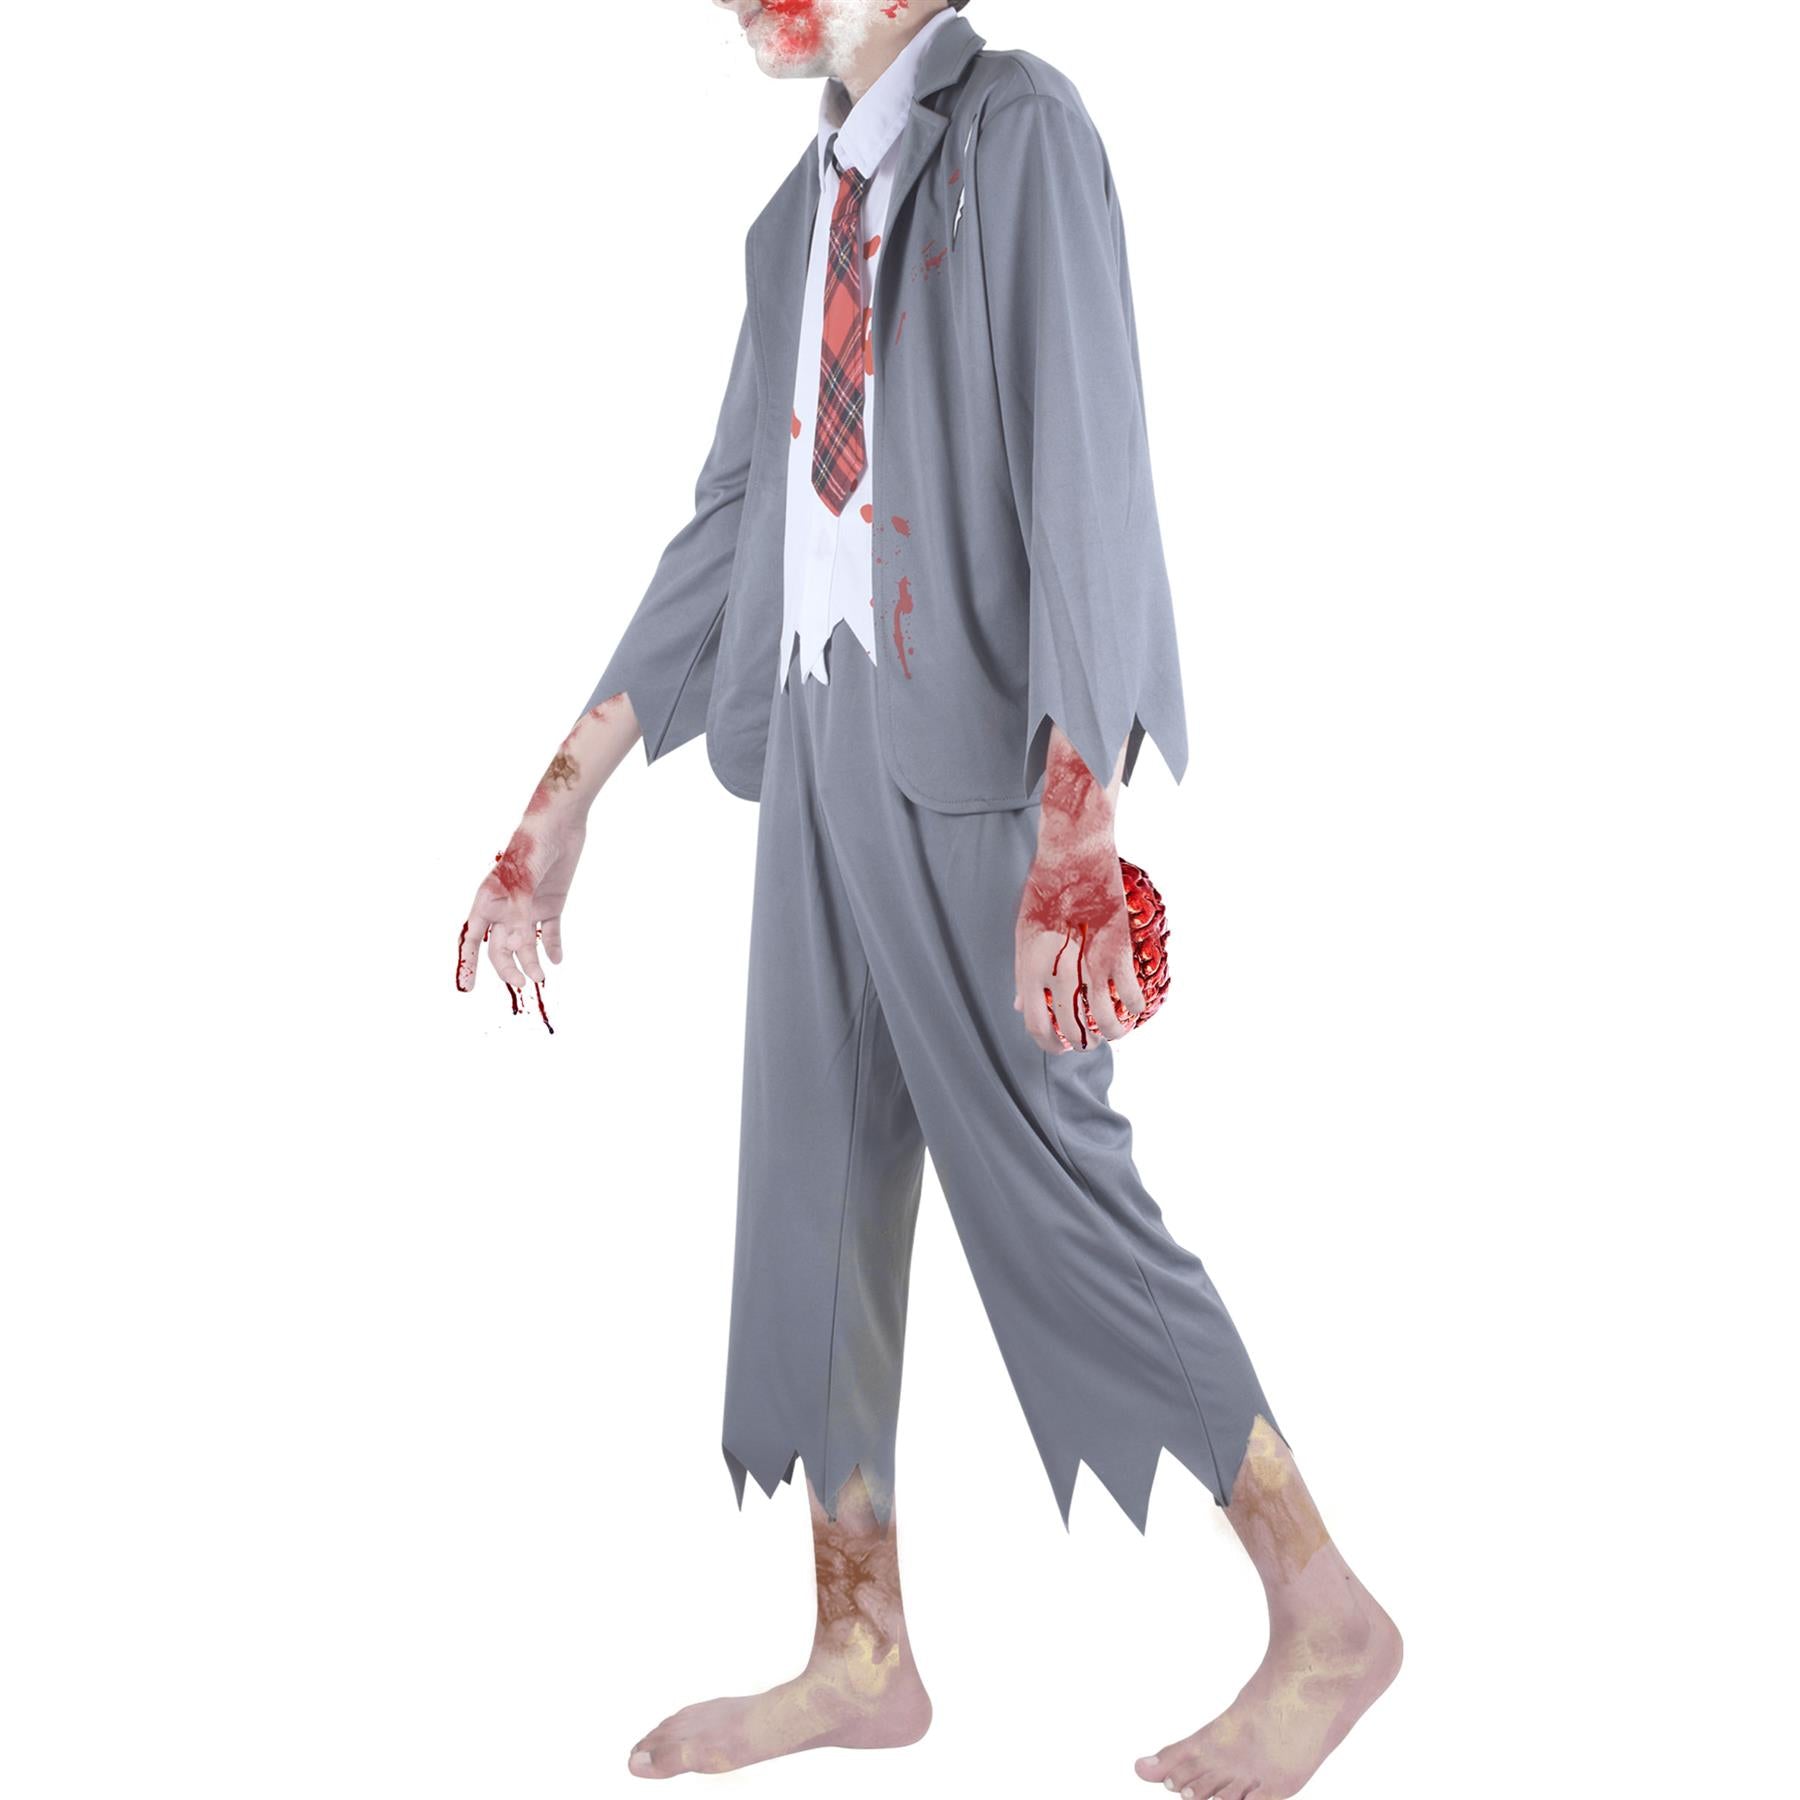 Kids Boys Zombie School Boy Halloween Costume Trick Or Treat Zombie Set